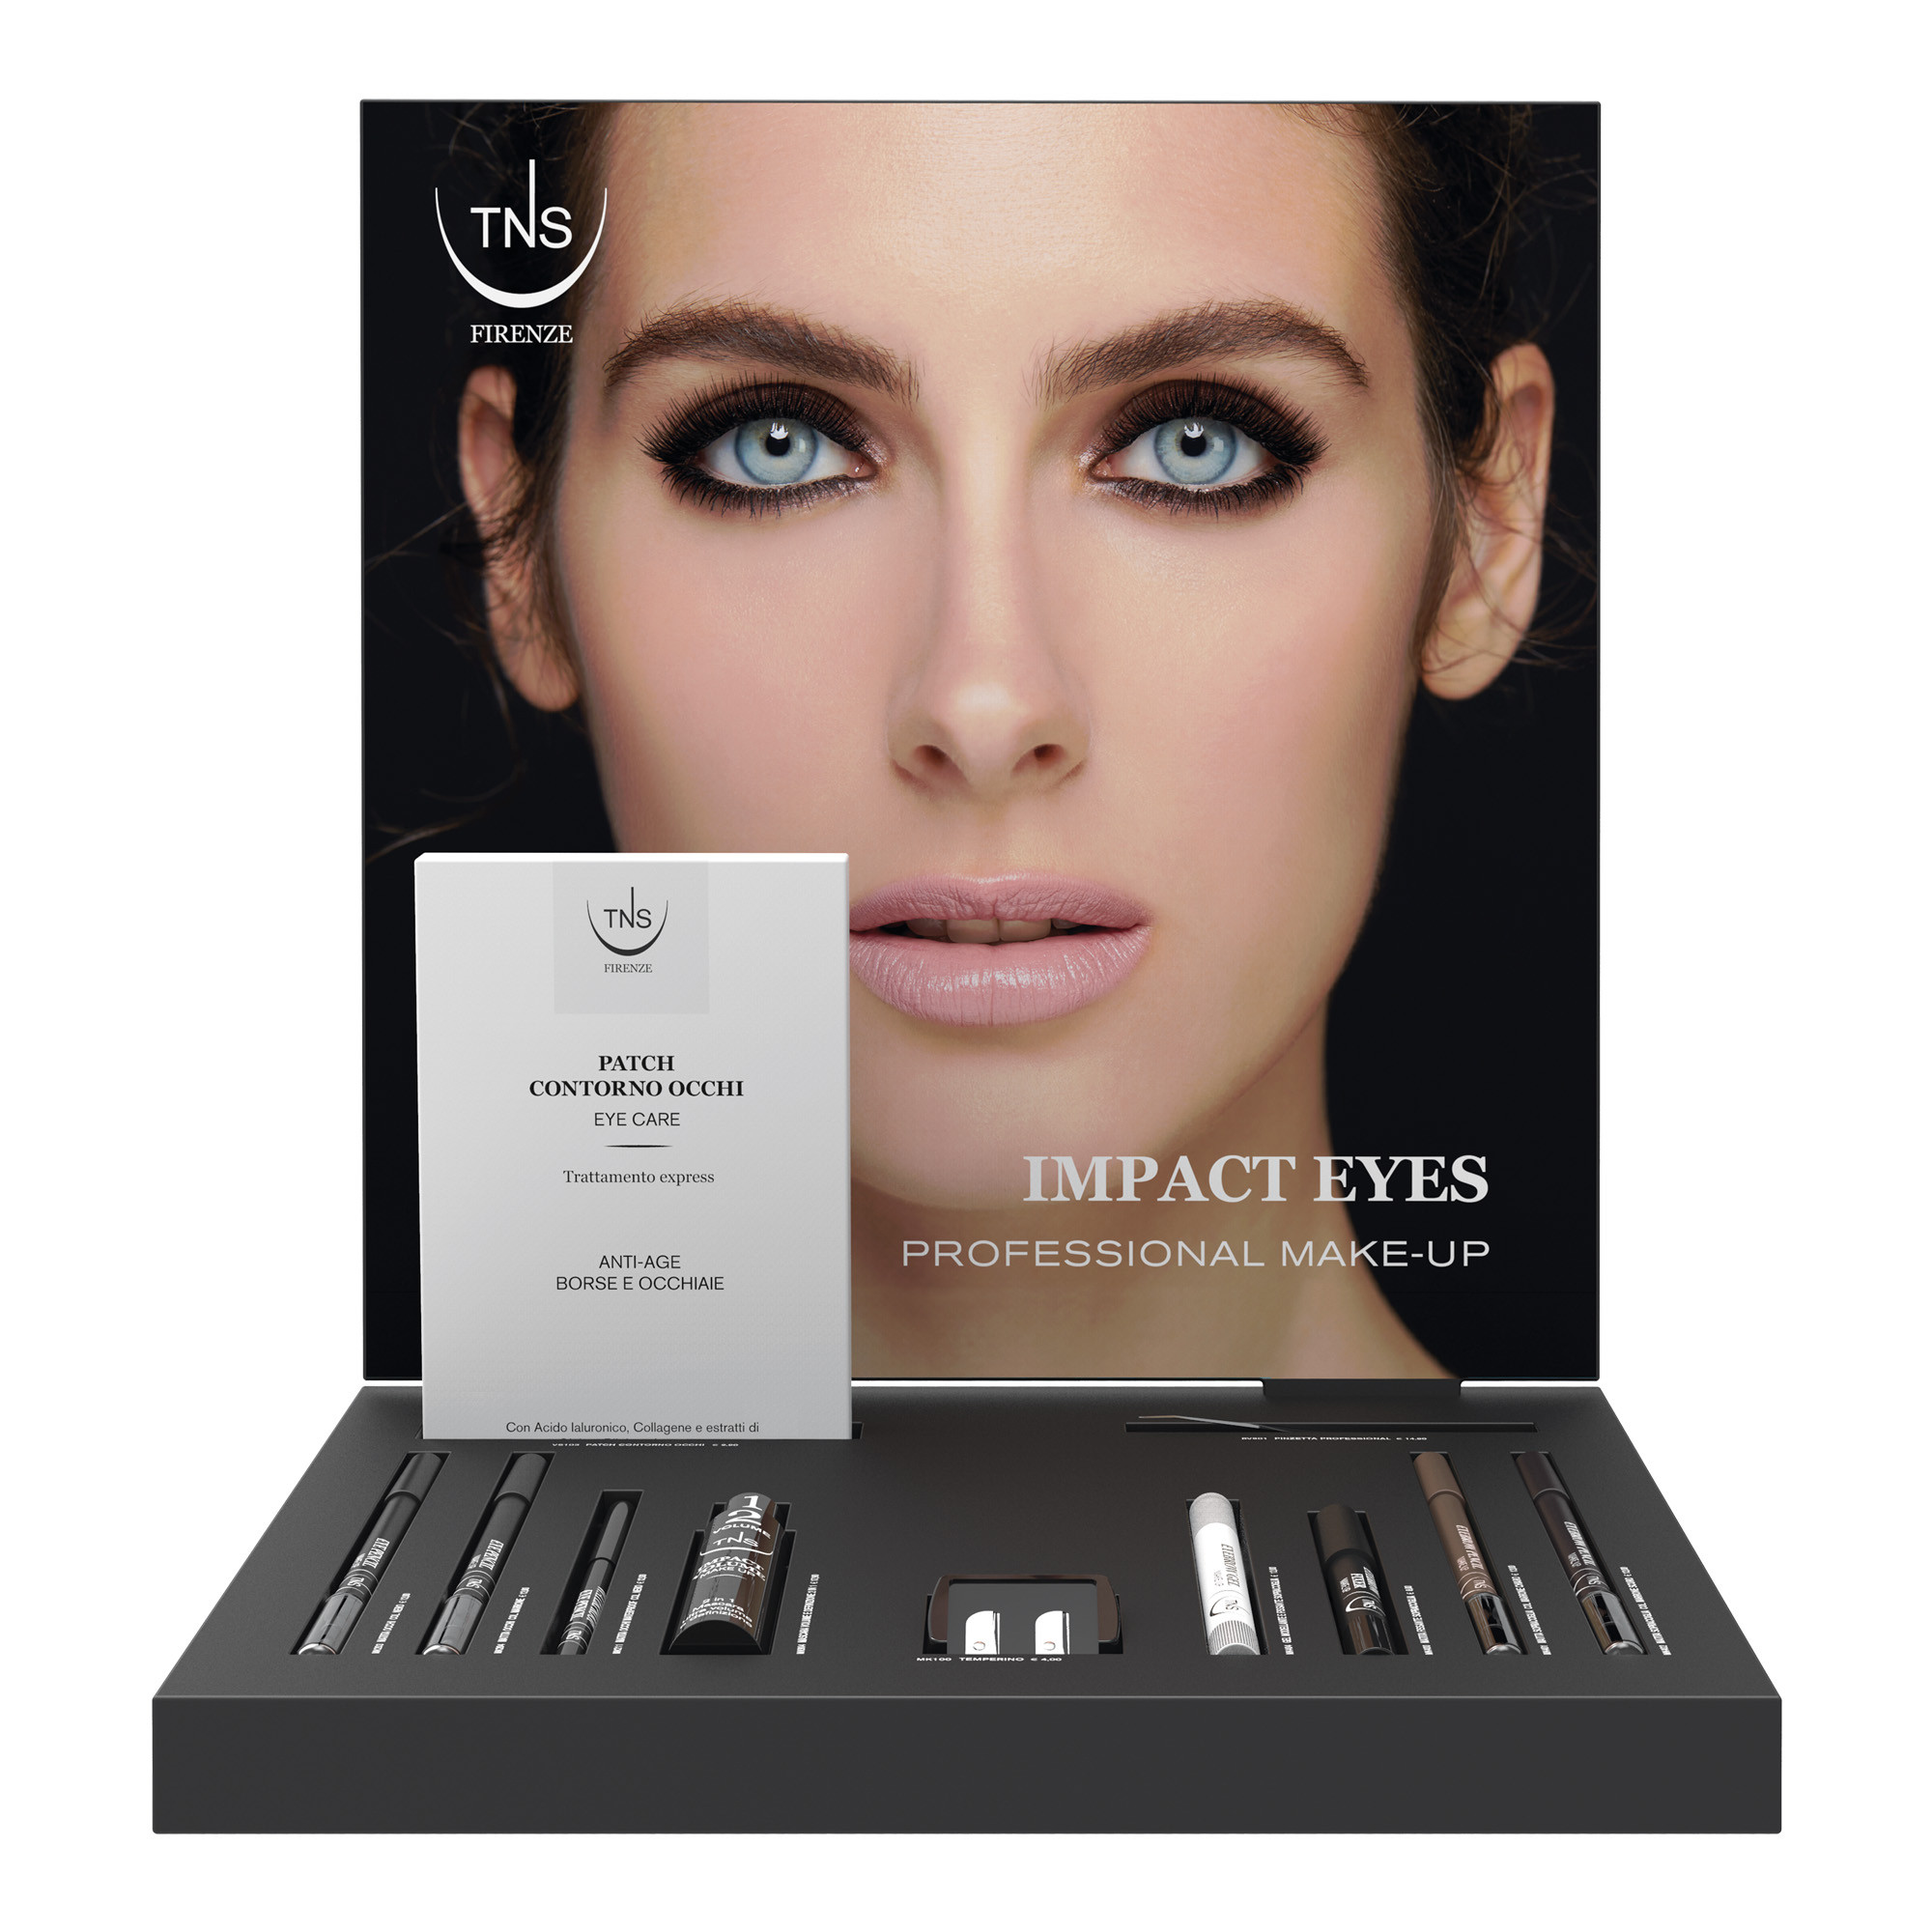 Impact Eyes Augen-Make-up-Display mit Tester-Produkten